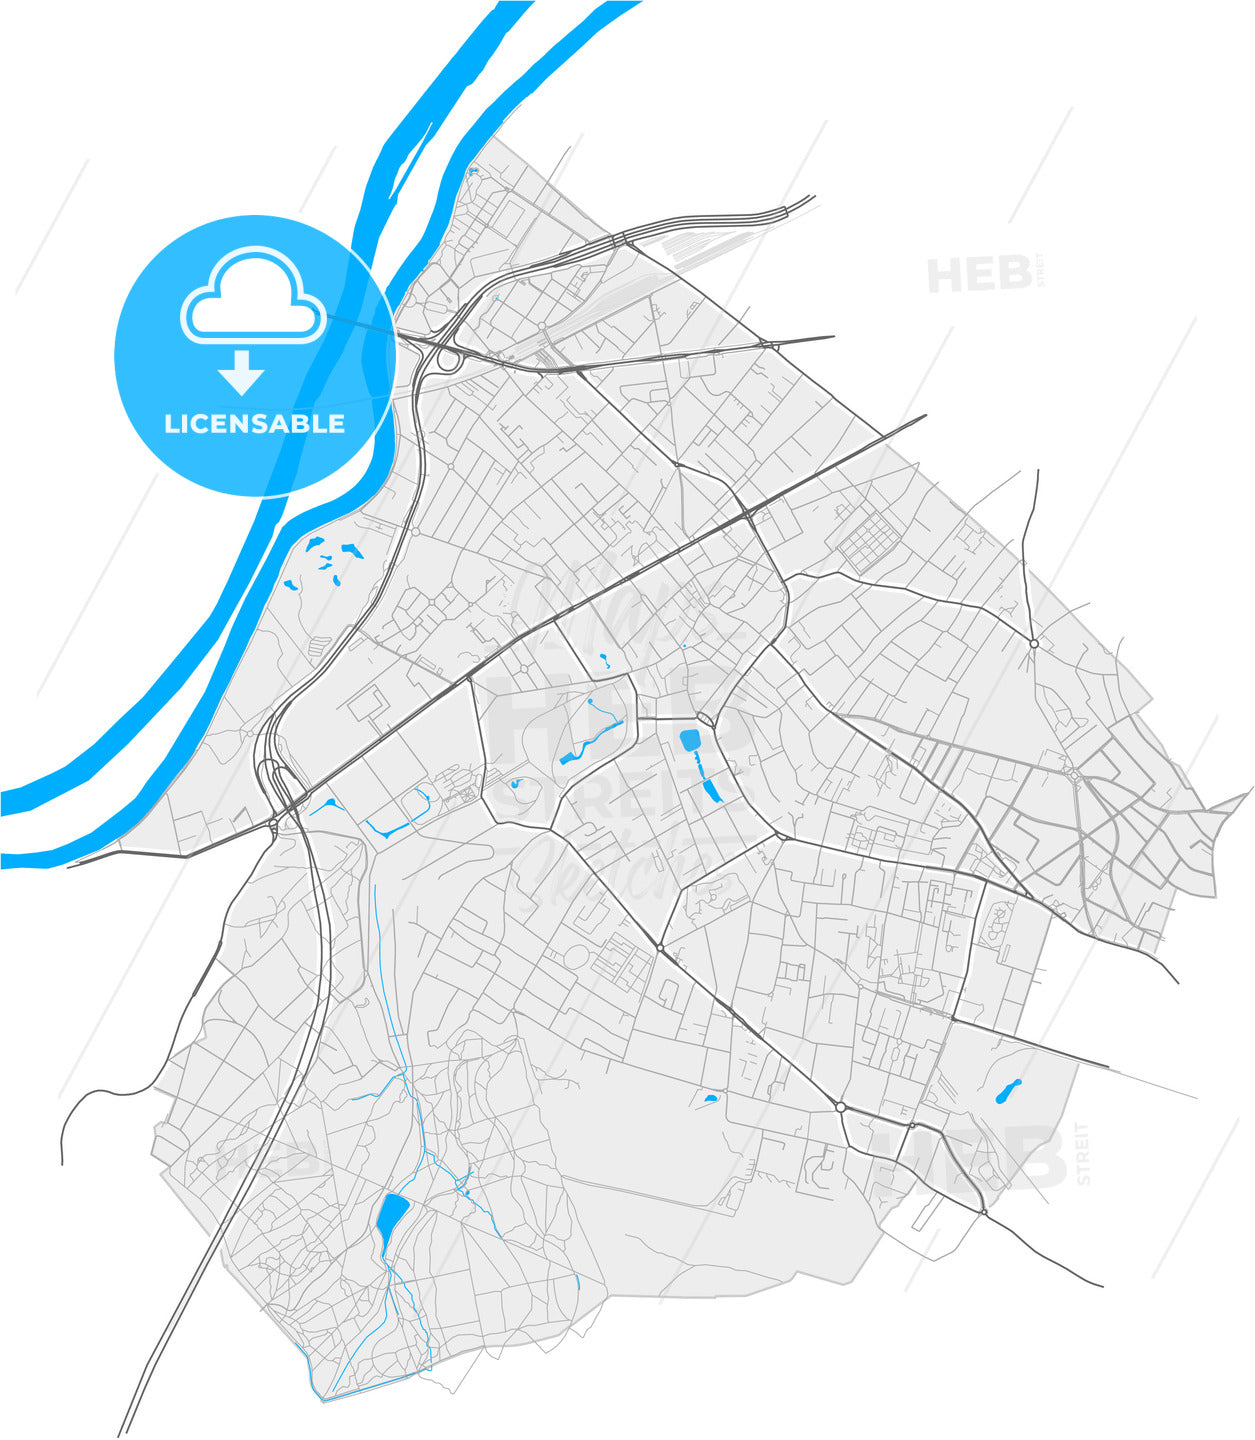 Rueil-Malmaison, Hauts-de-Seine, France, high quality vector map